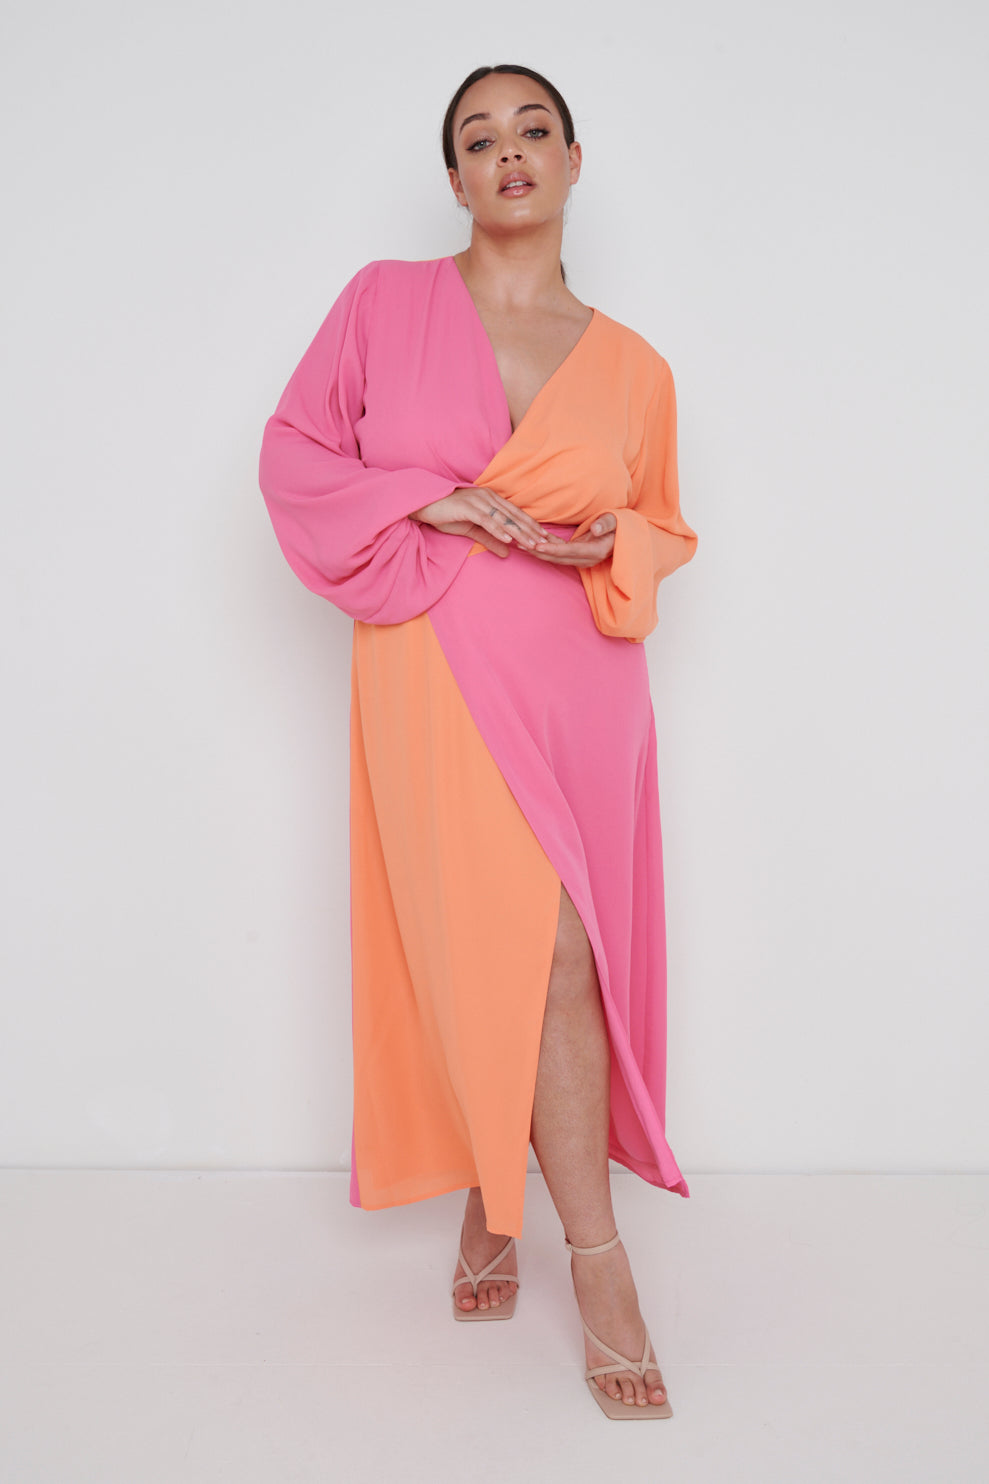 Frieda Knot Contrast Dress Curve - Orange and Pink